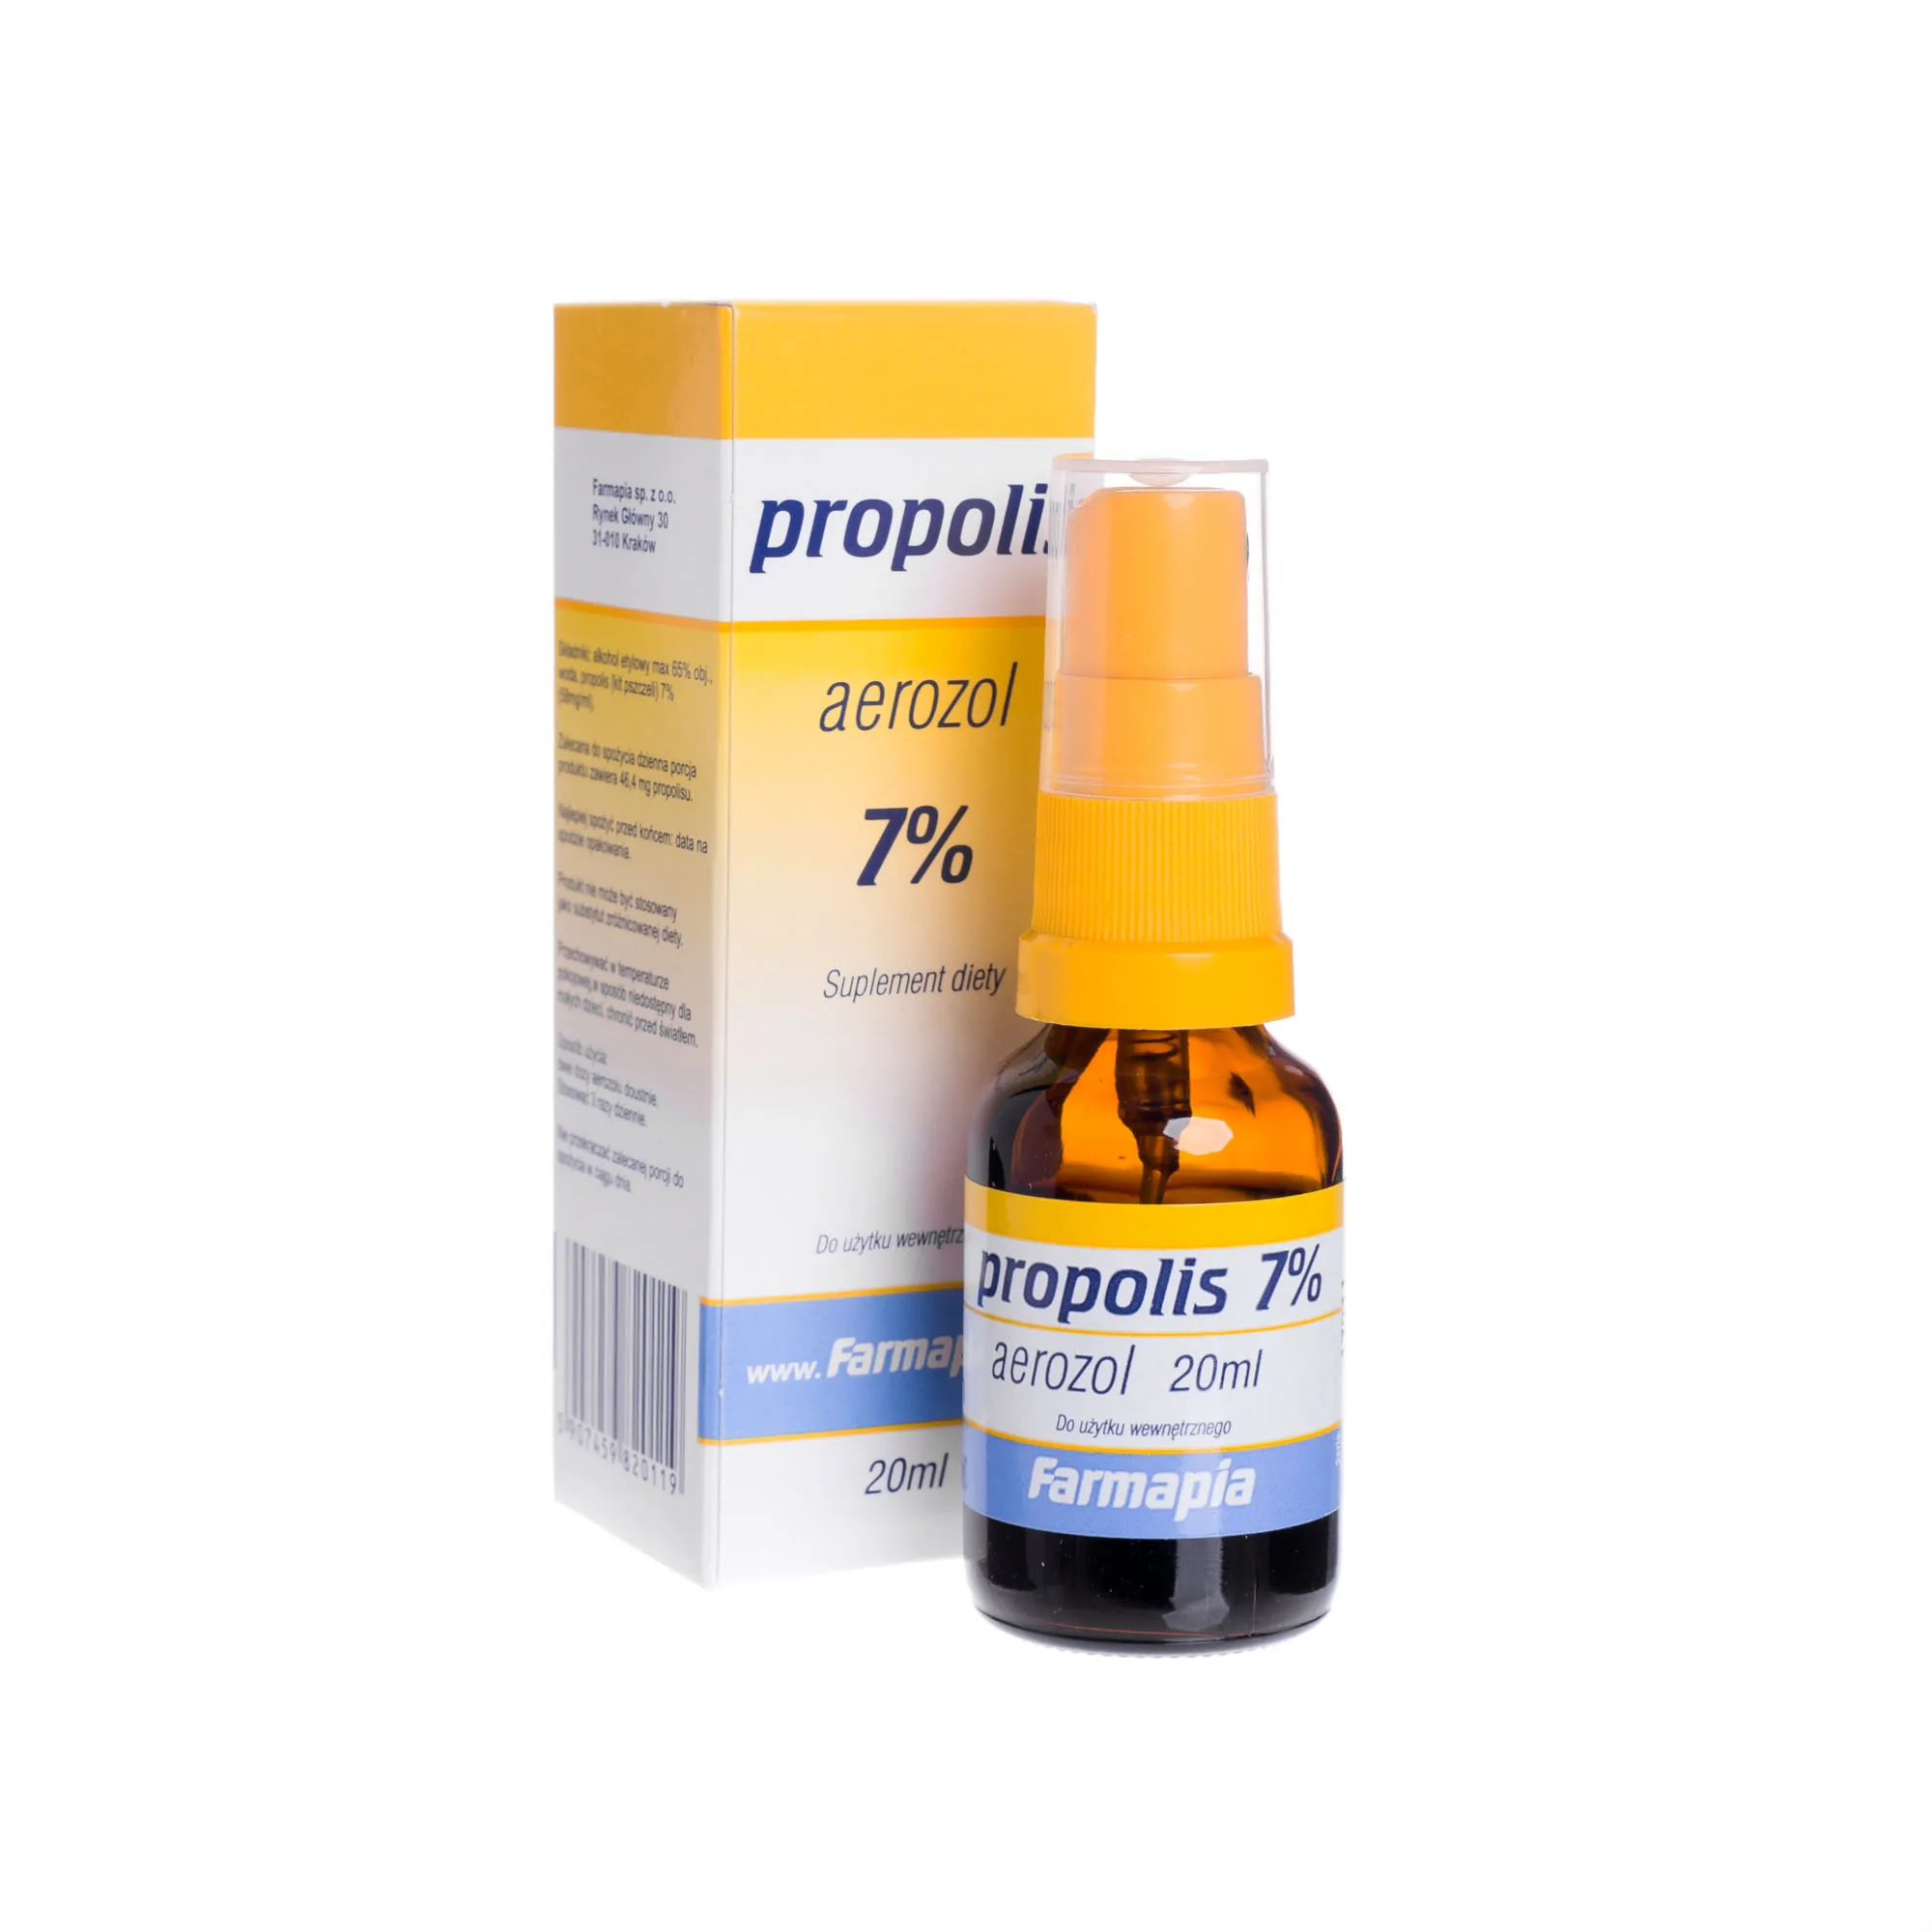 Propolis aerozol 7% suplement diety, 20 ml 